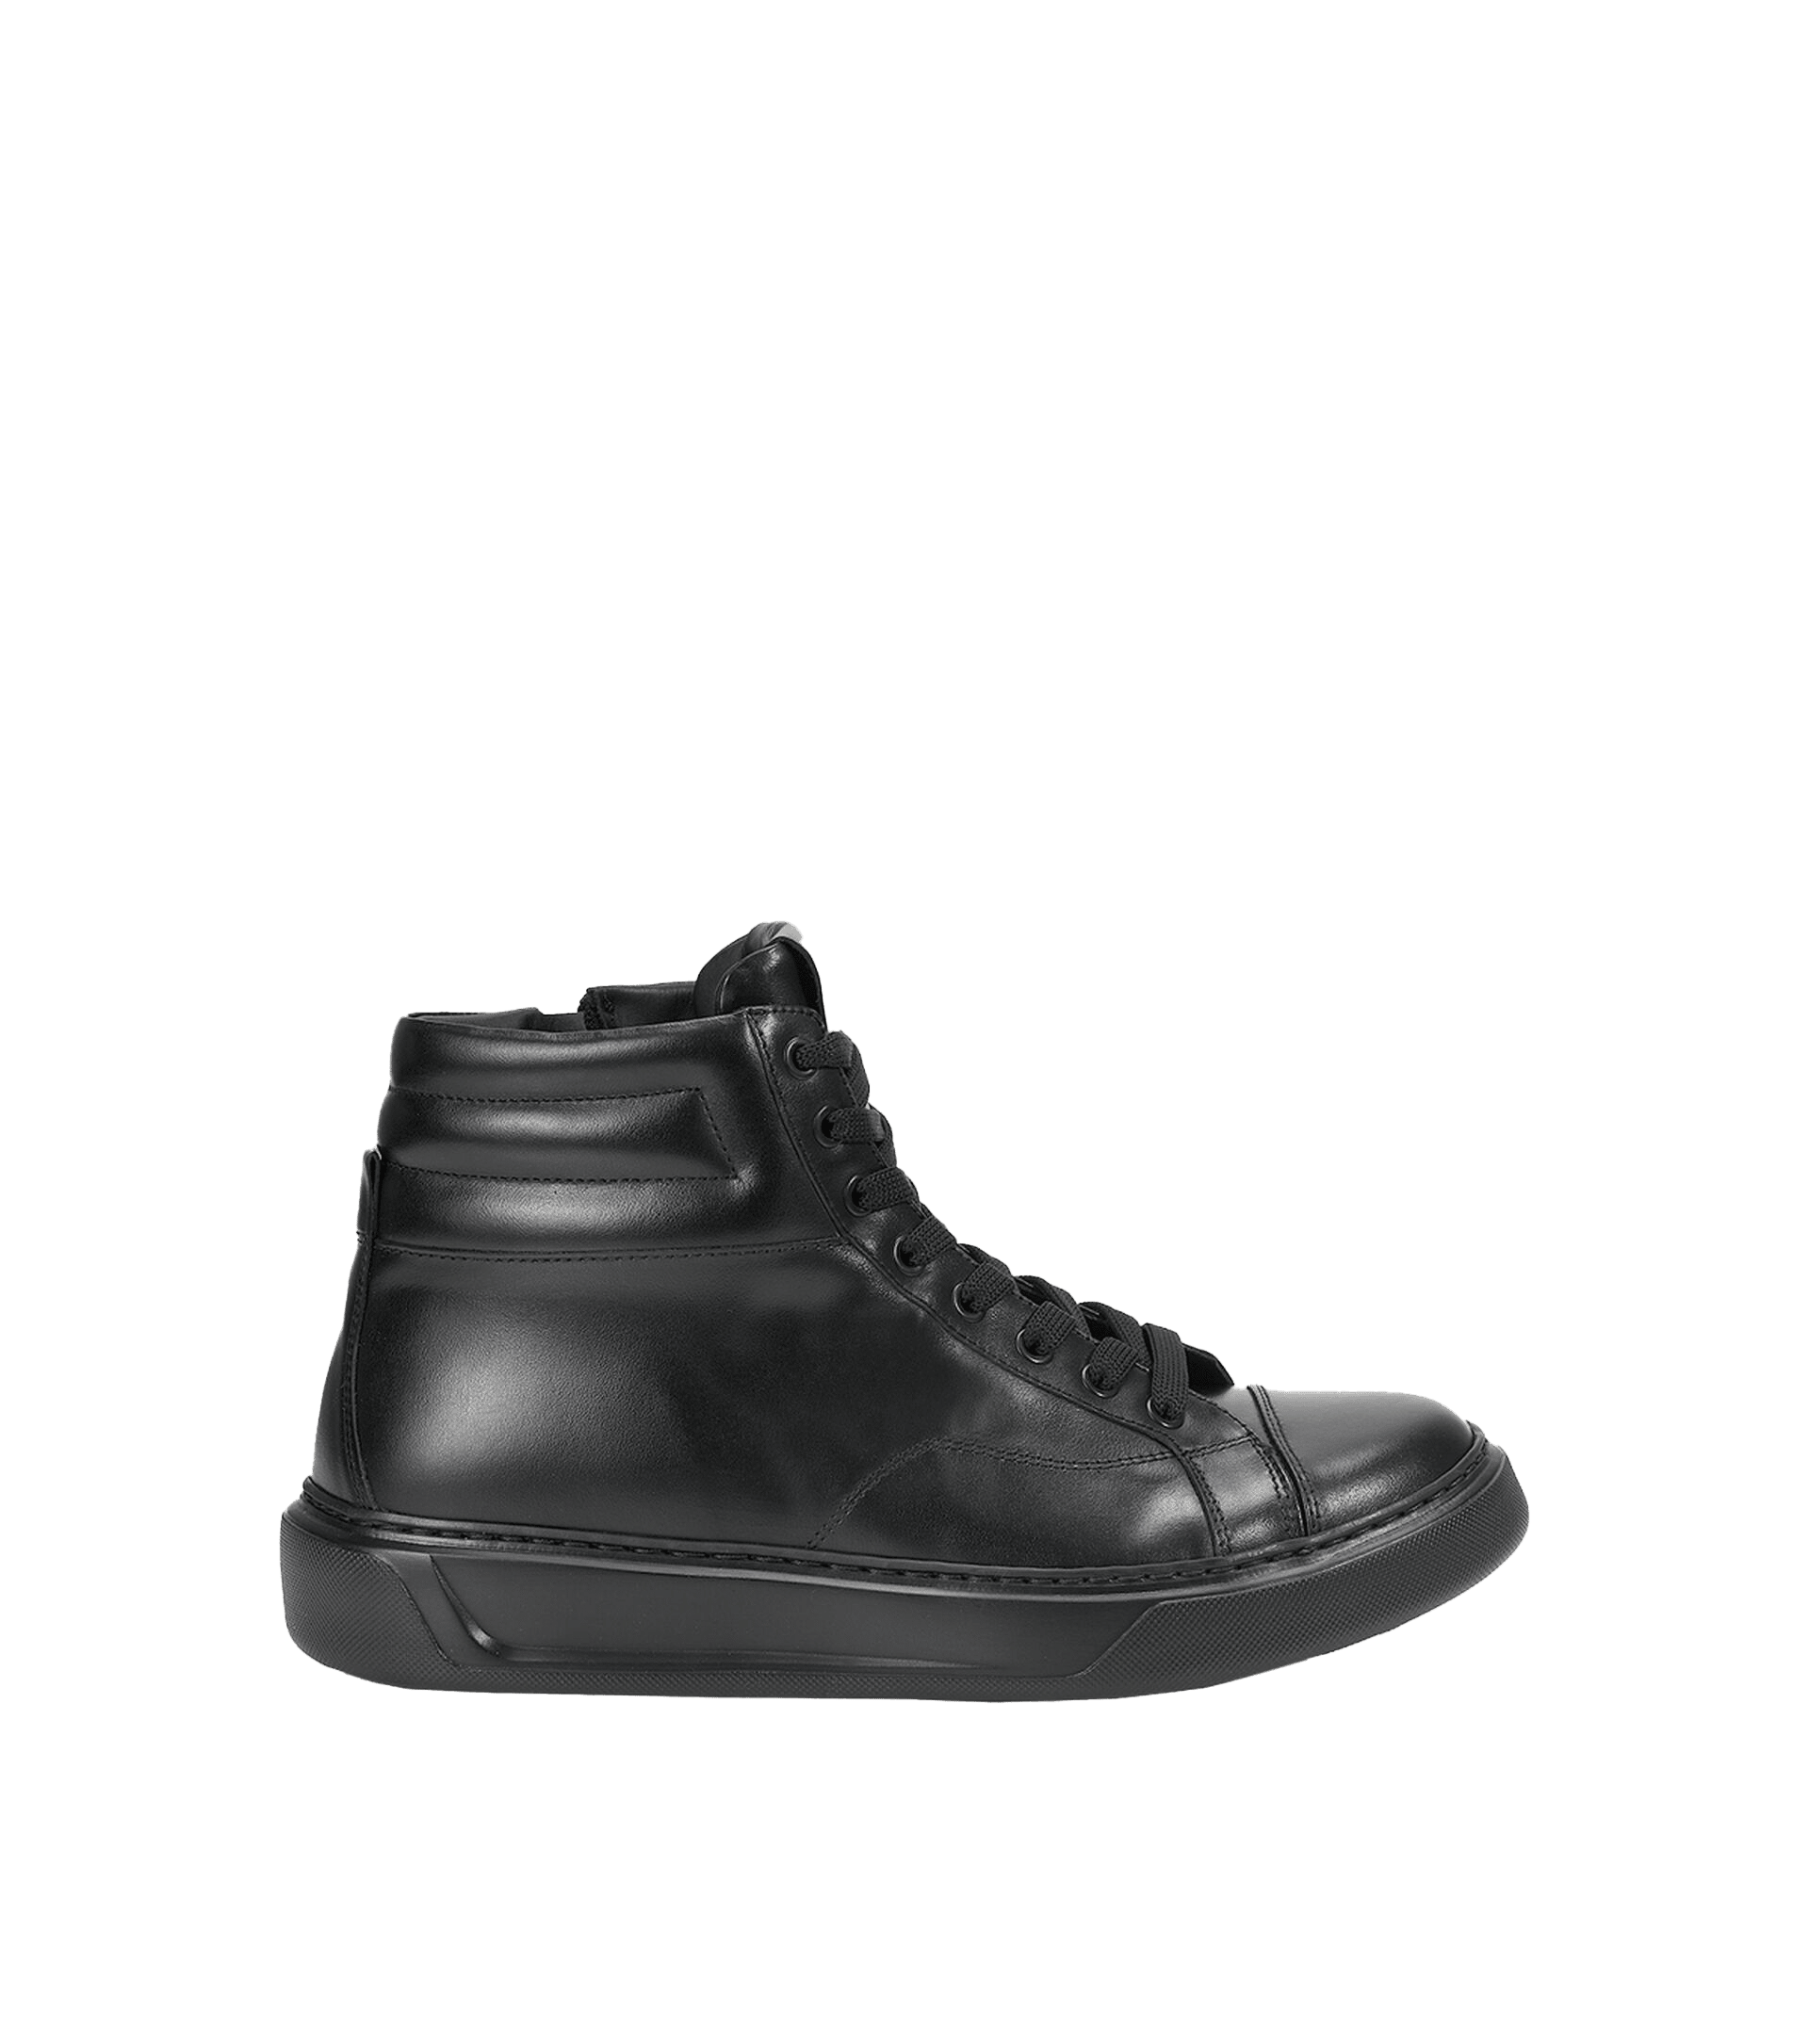 Sneaker Edit | Browns Shoes